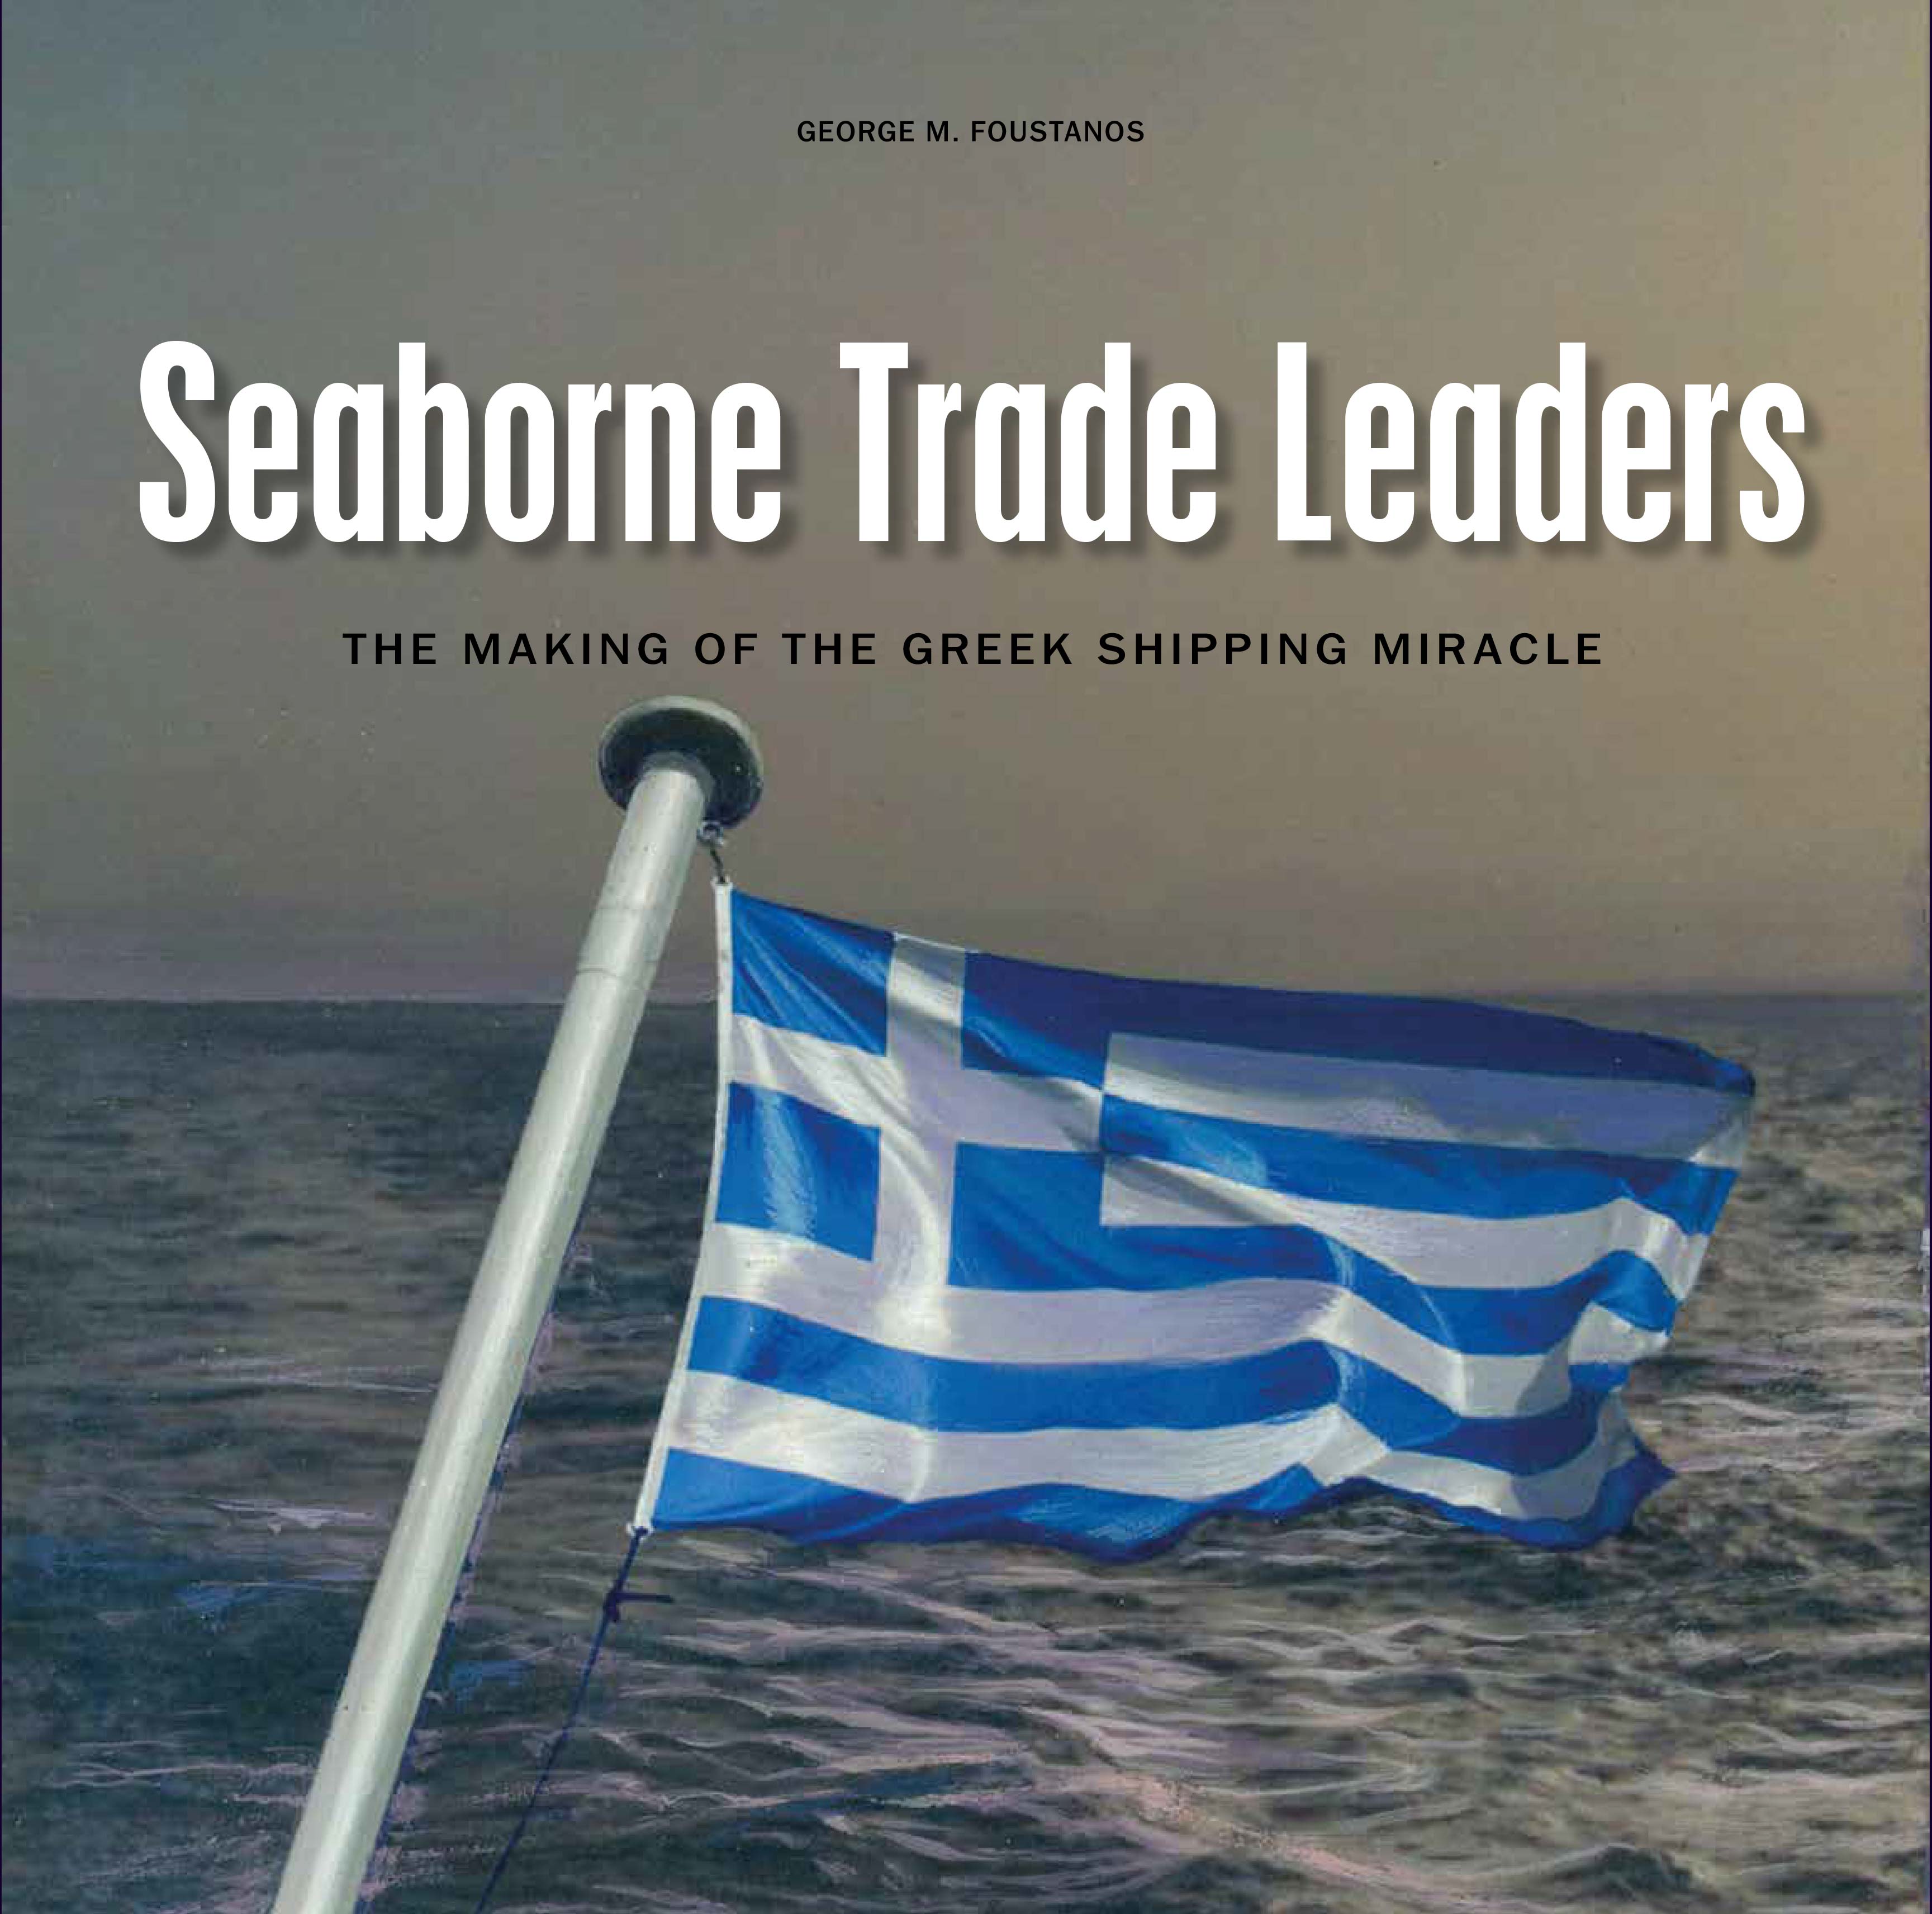 Seaborne trade leaders